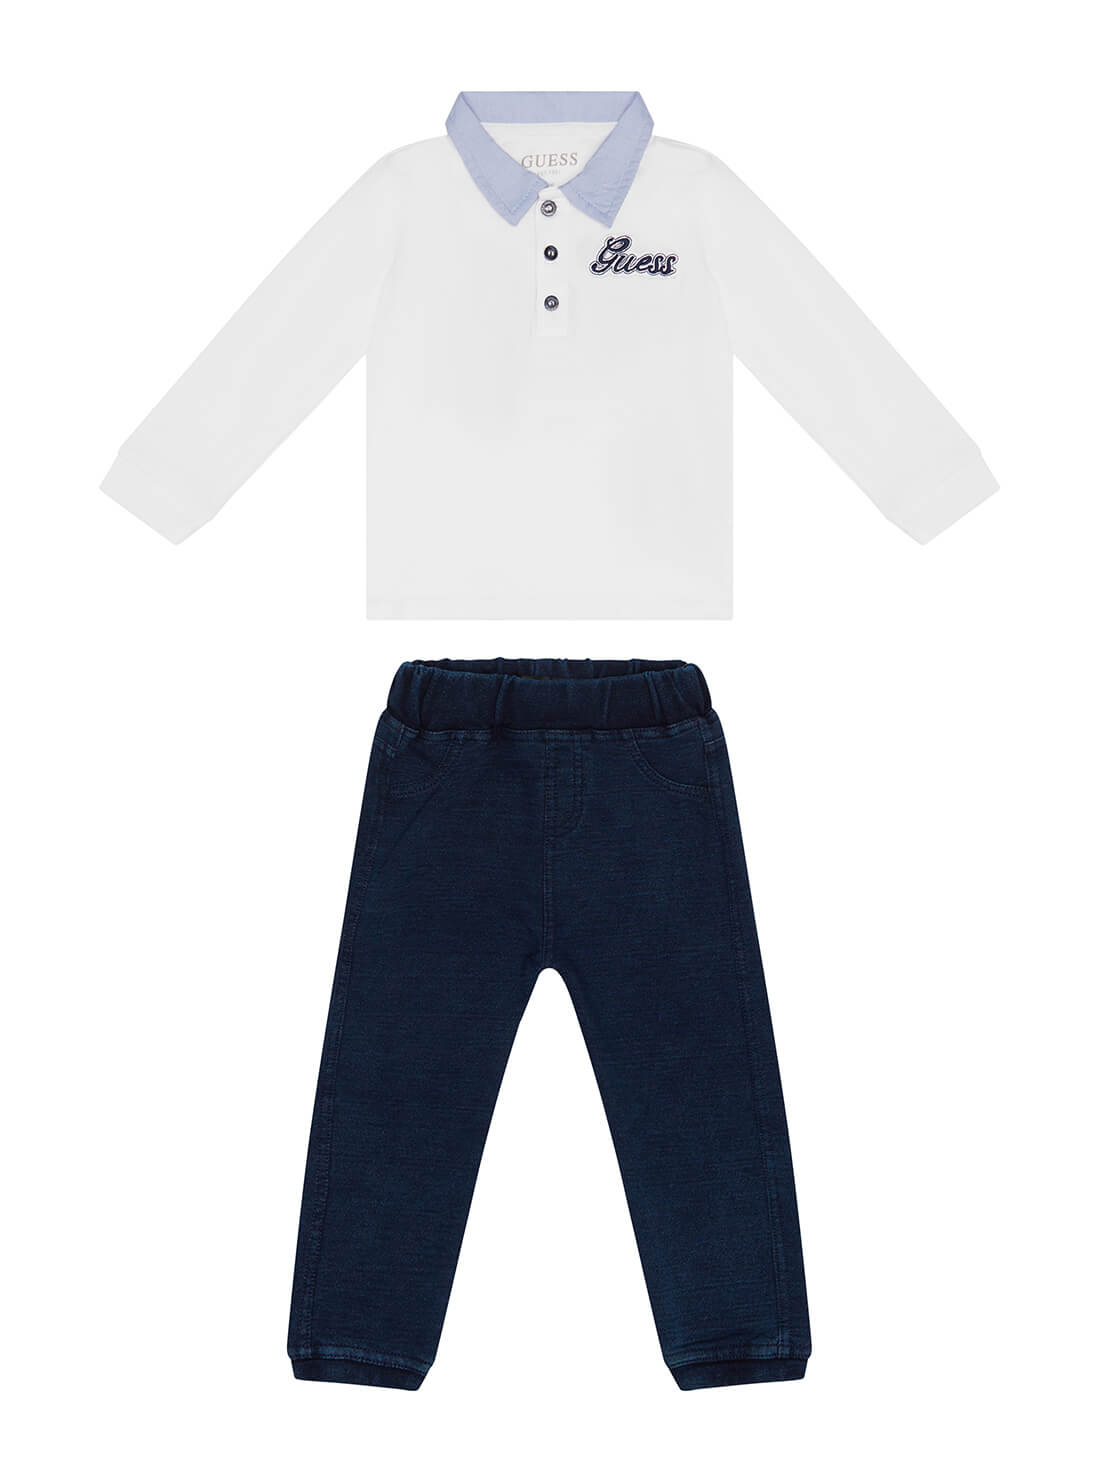 GUESS Kids Boys White Polo and Knit Denim Pants 2-piece Set (3-18m) I1BG07I3Z11 Front View